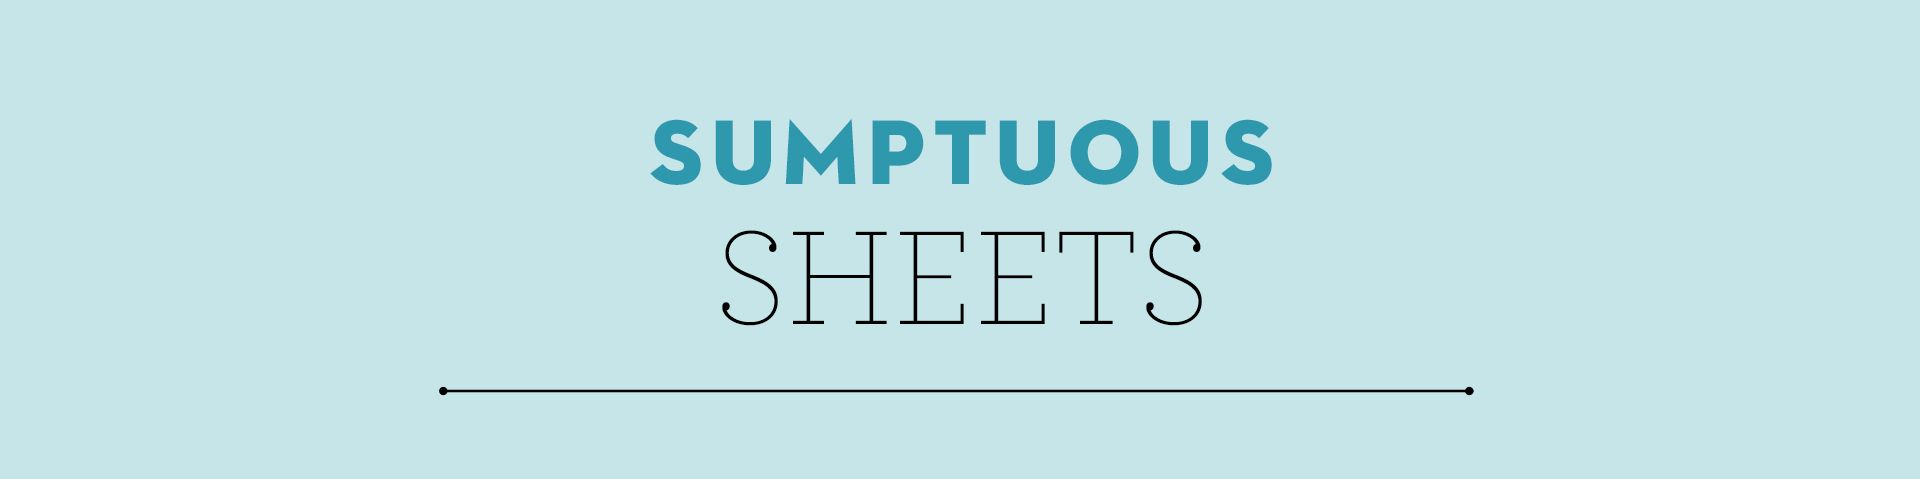 sumptous sheets section header